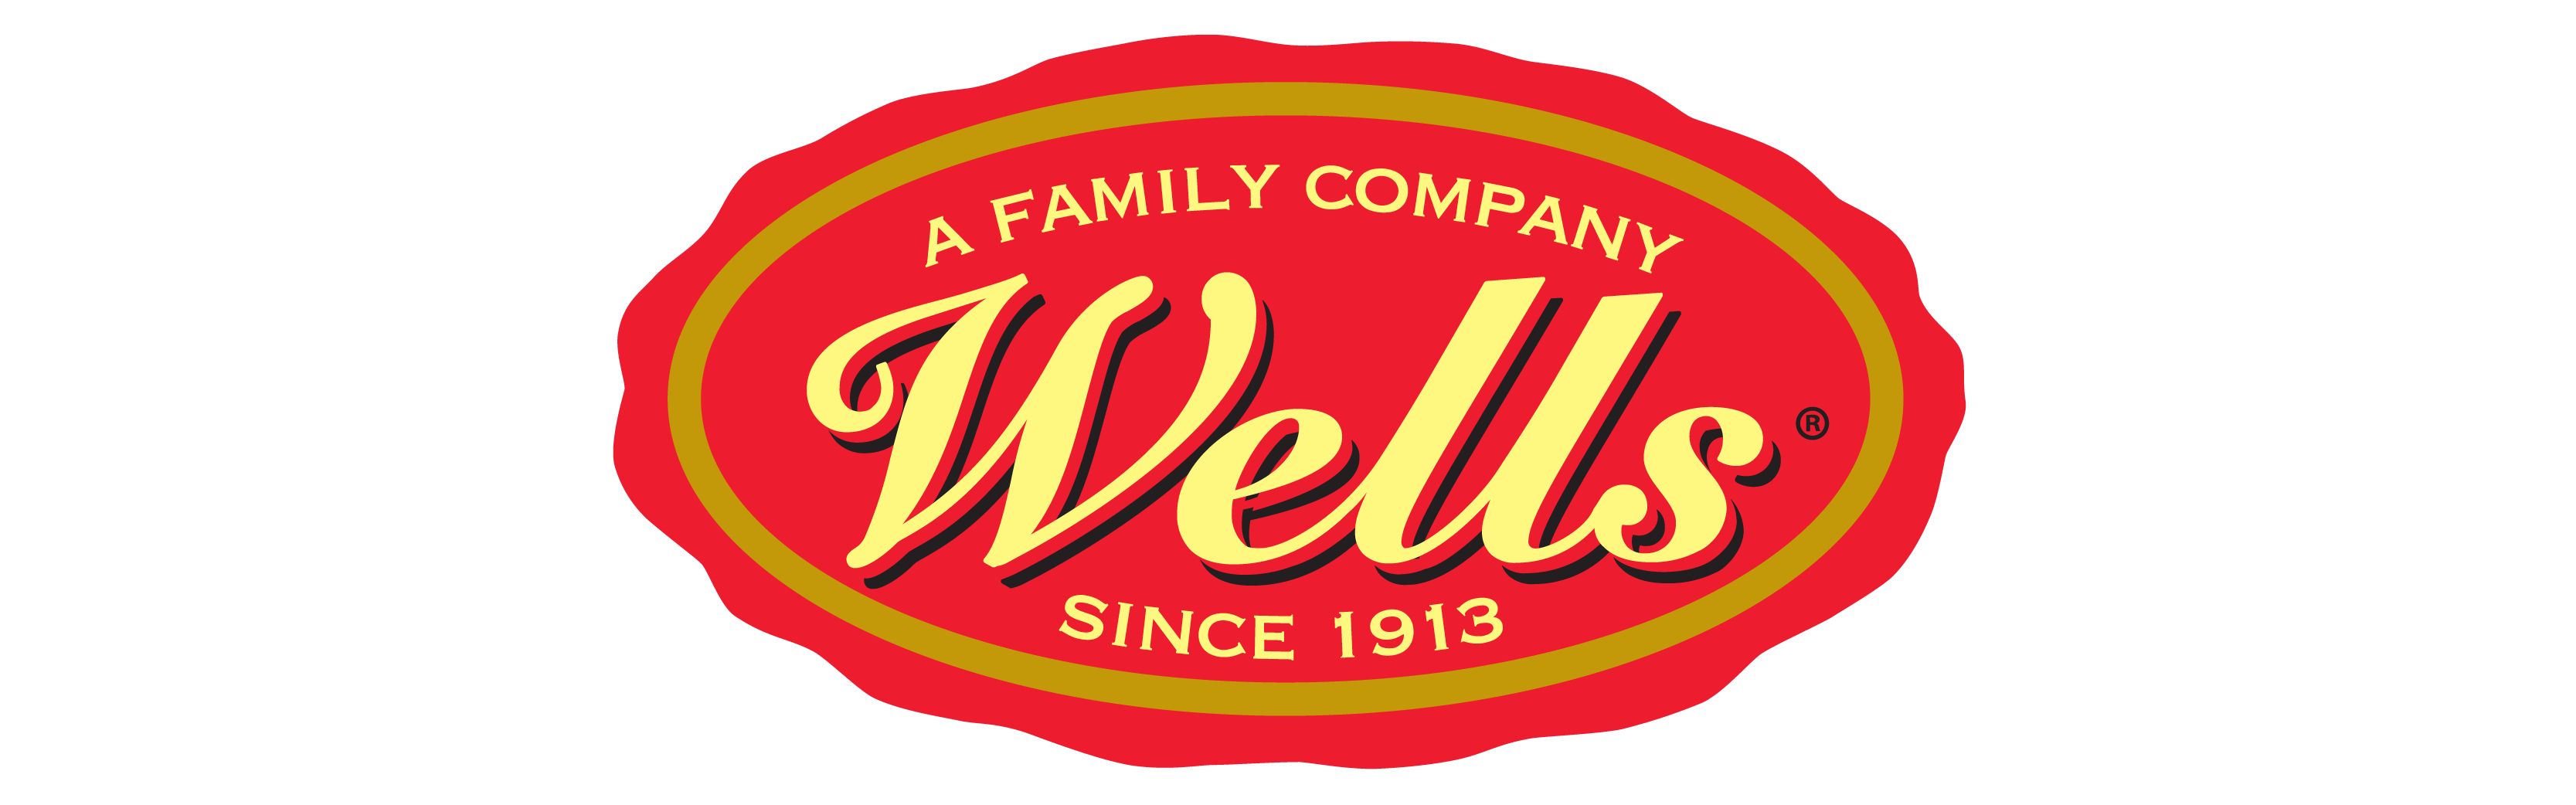 wells